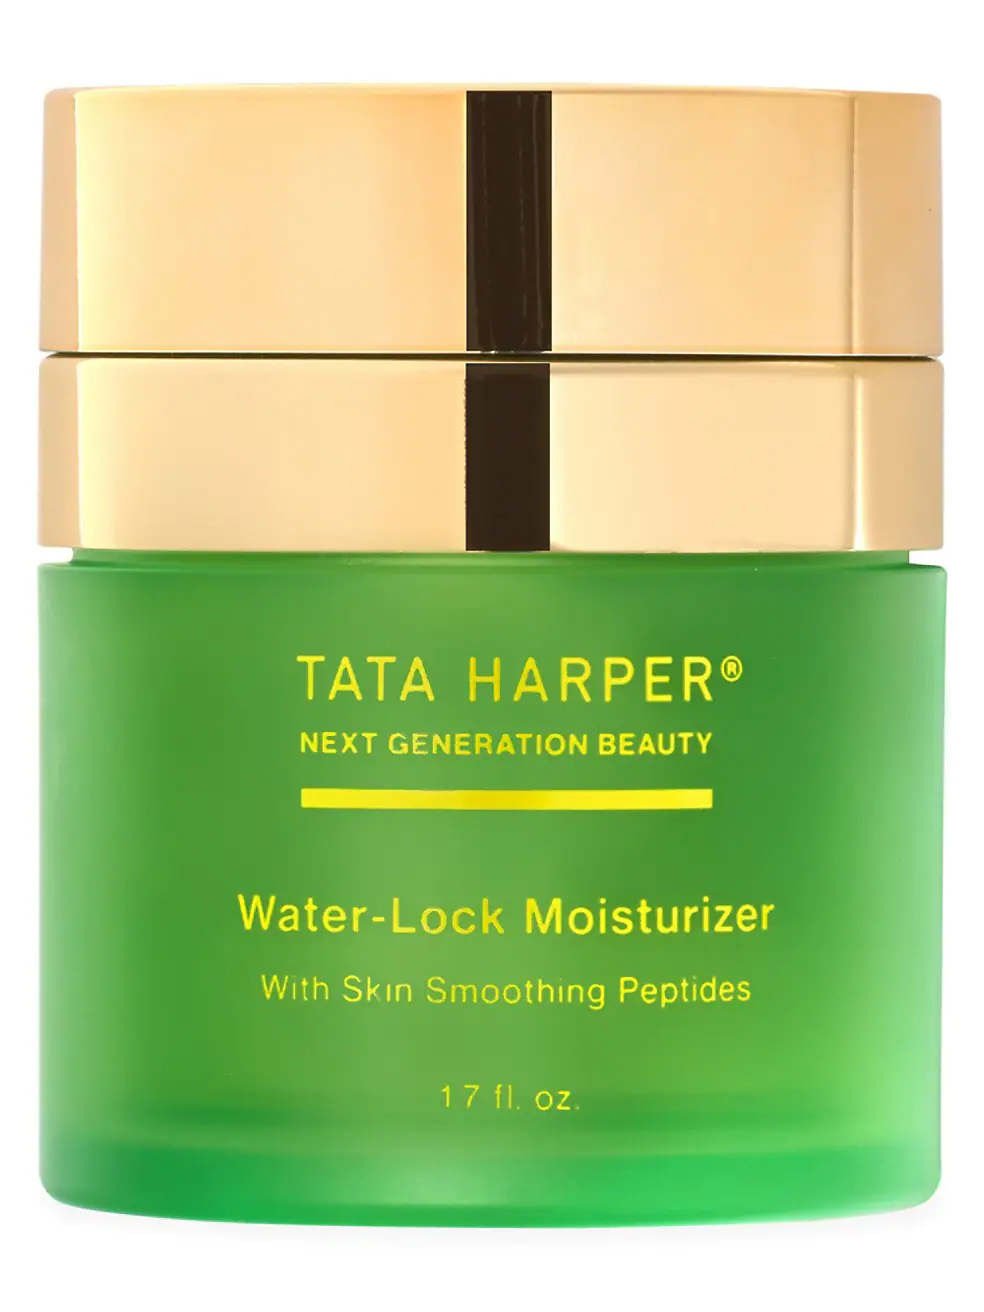 Tata Harper water lock moisturizer